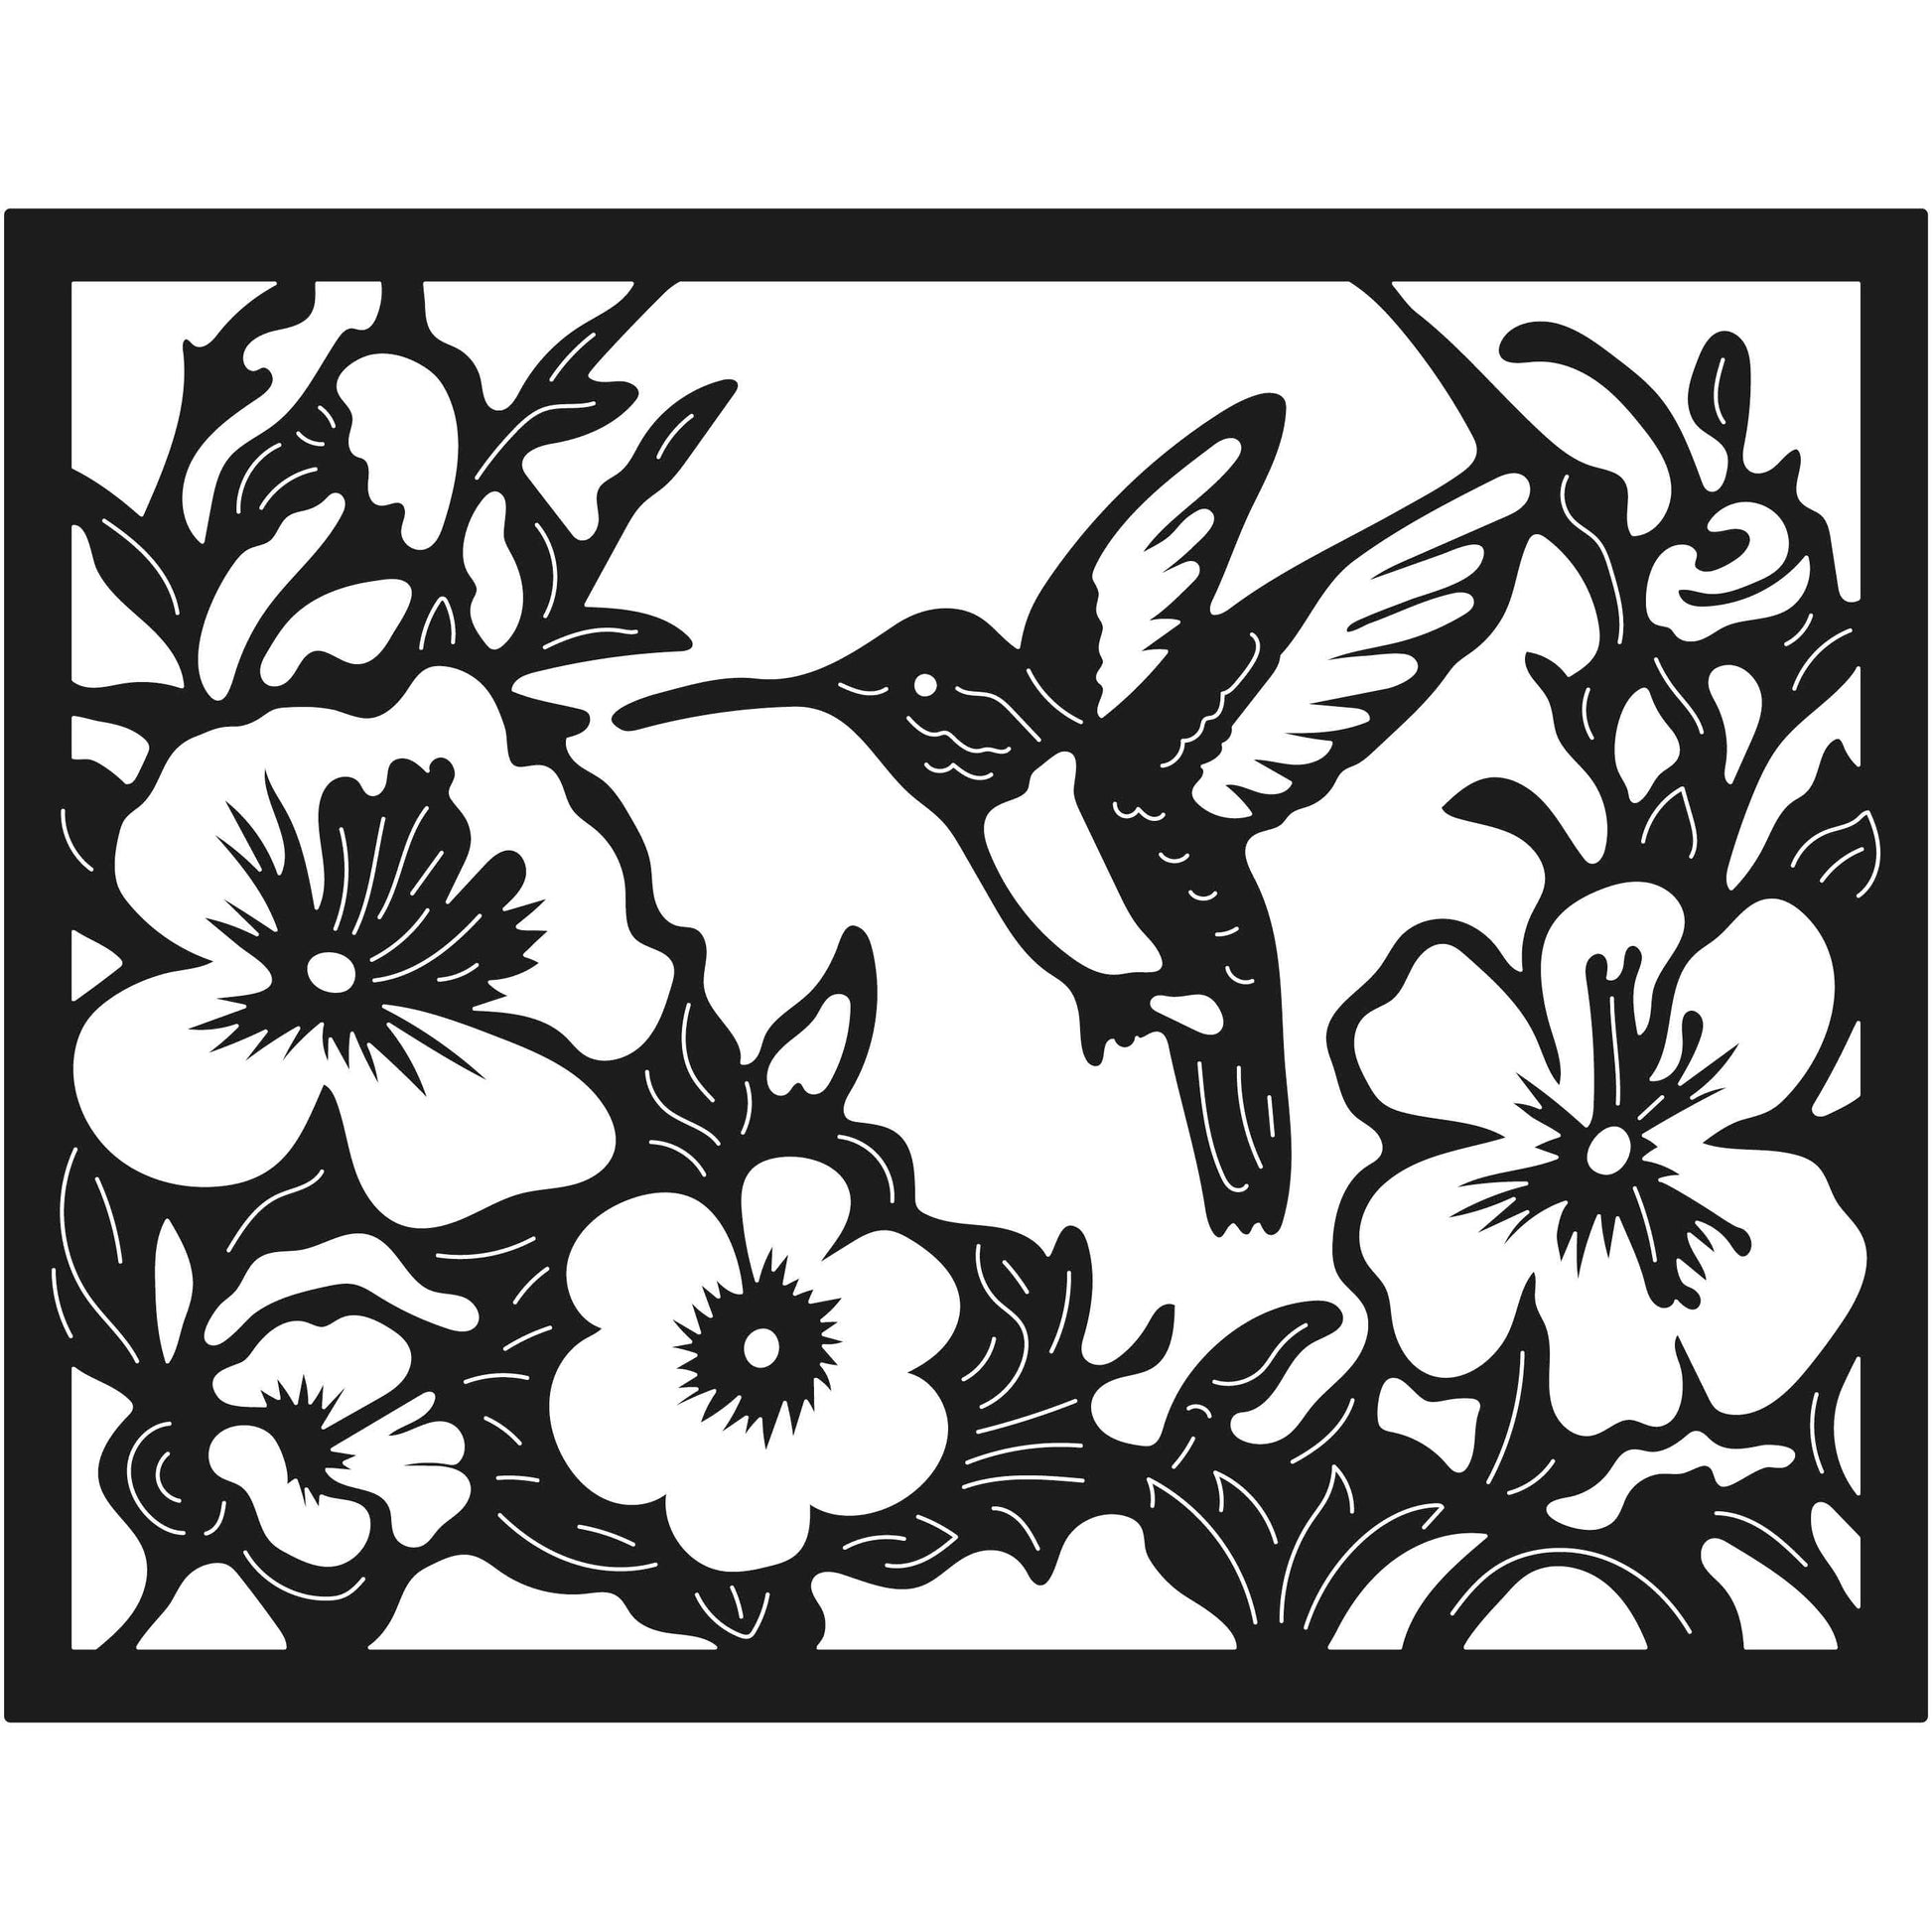 Hummingbird flower panel 17